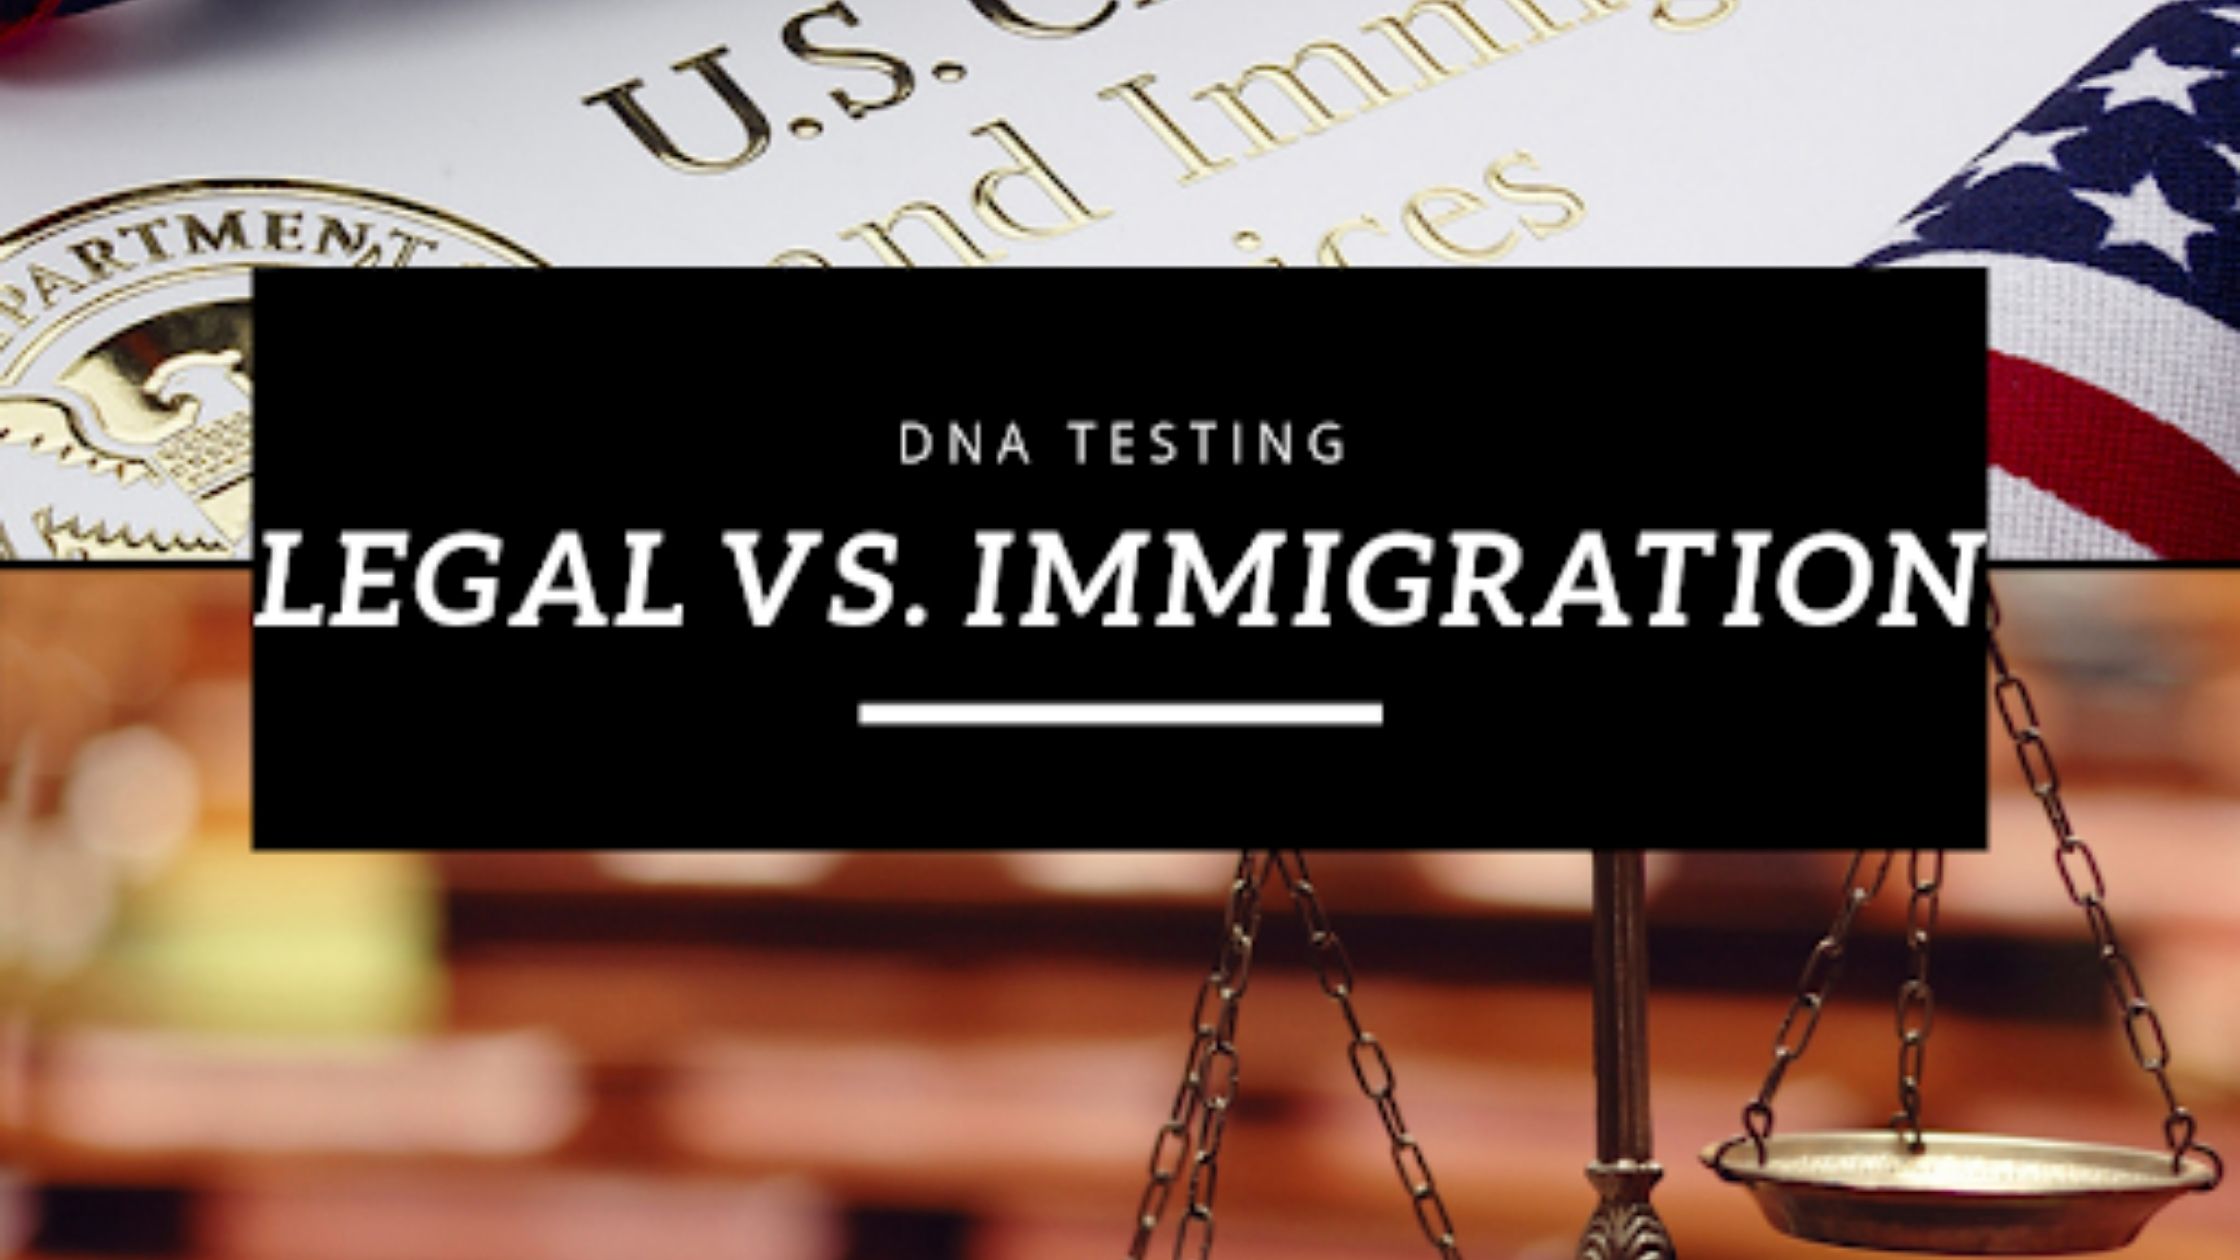 LEGAL VS IMMIGRATION DNA